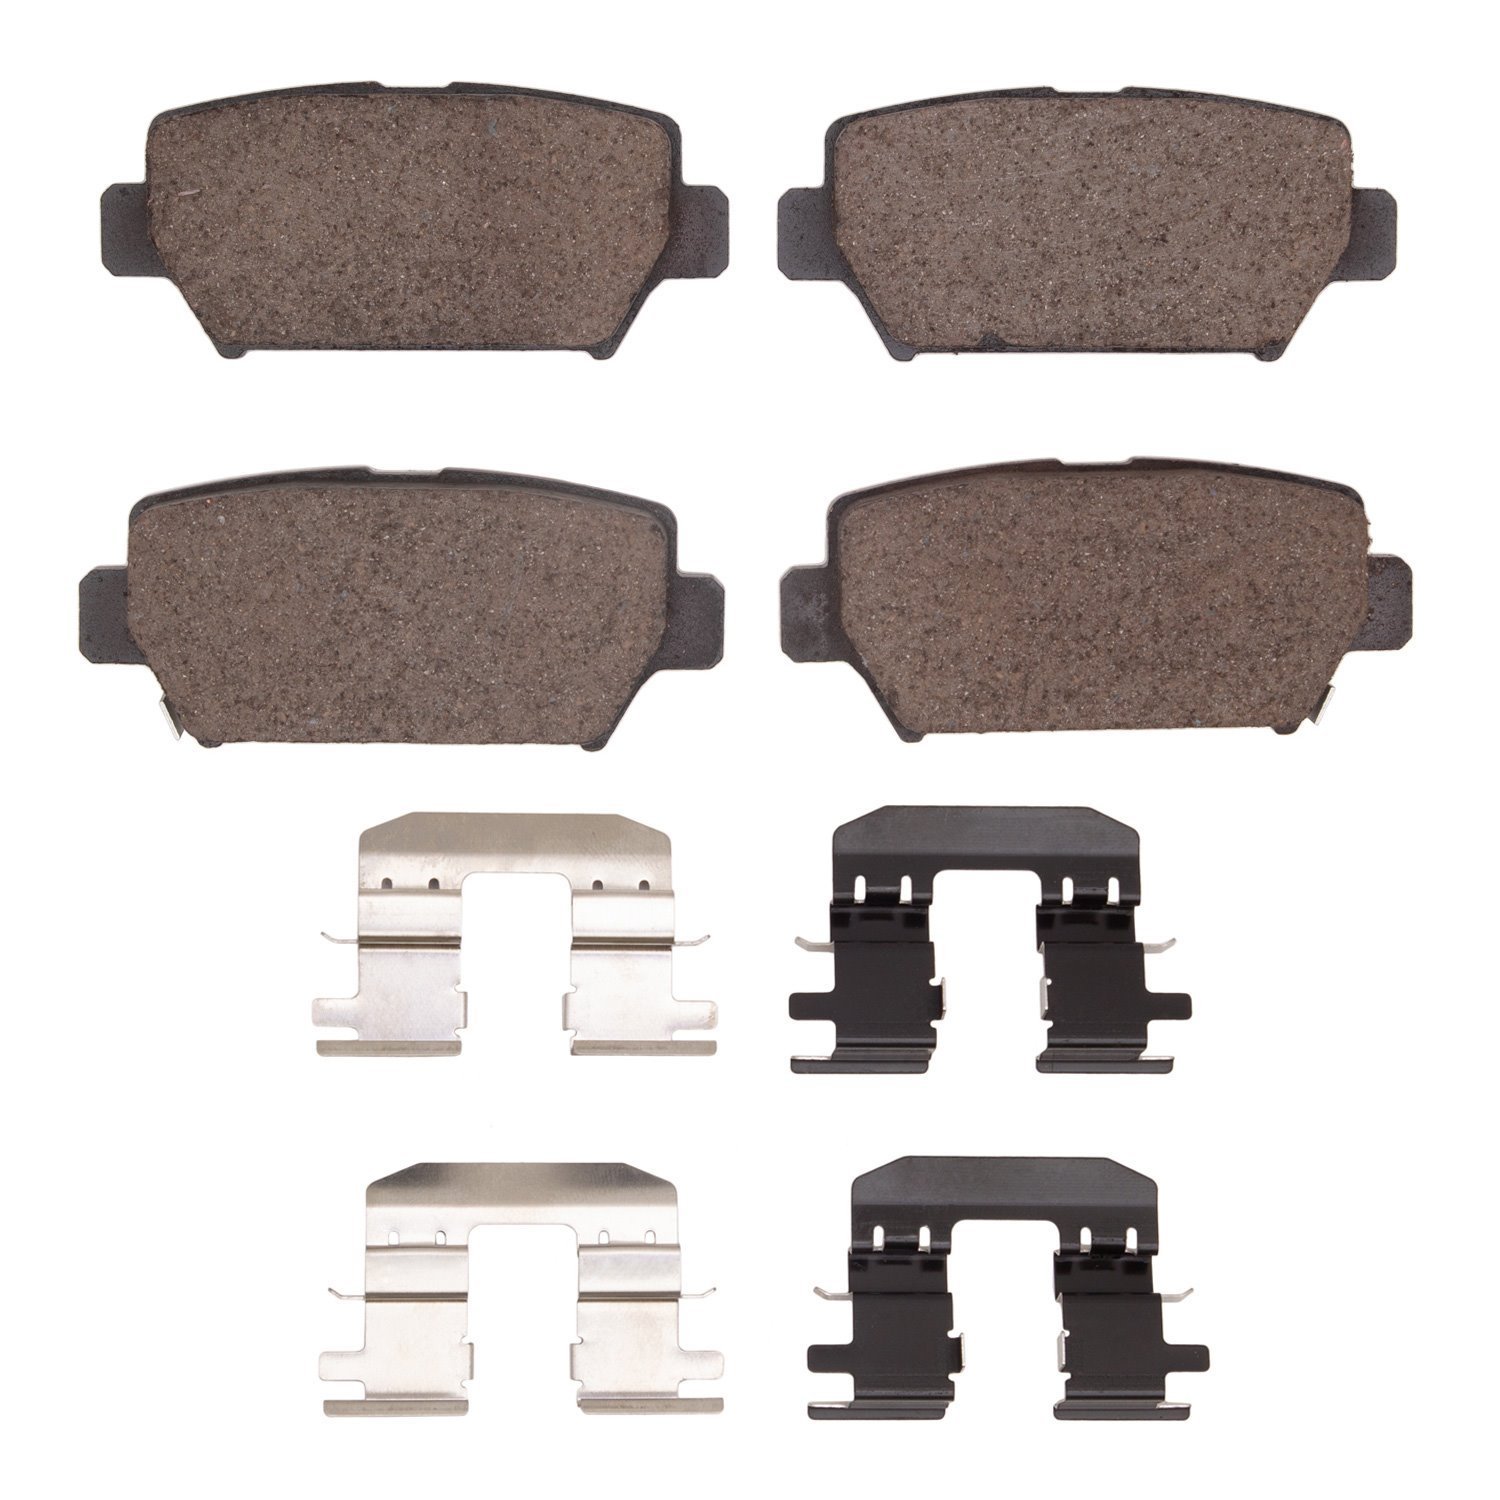 1551-2156-01 5000 Advanced Ceramic Brake Pads & Hardware Kit, Fits Select Mitsubishi, Position: Rear